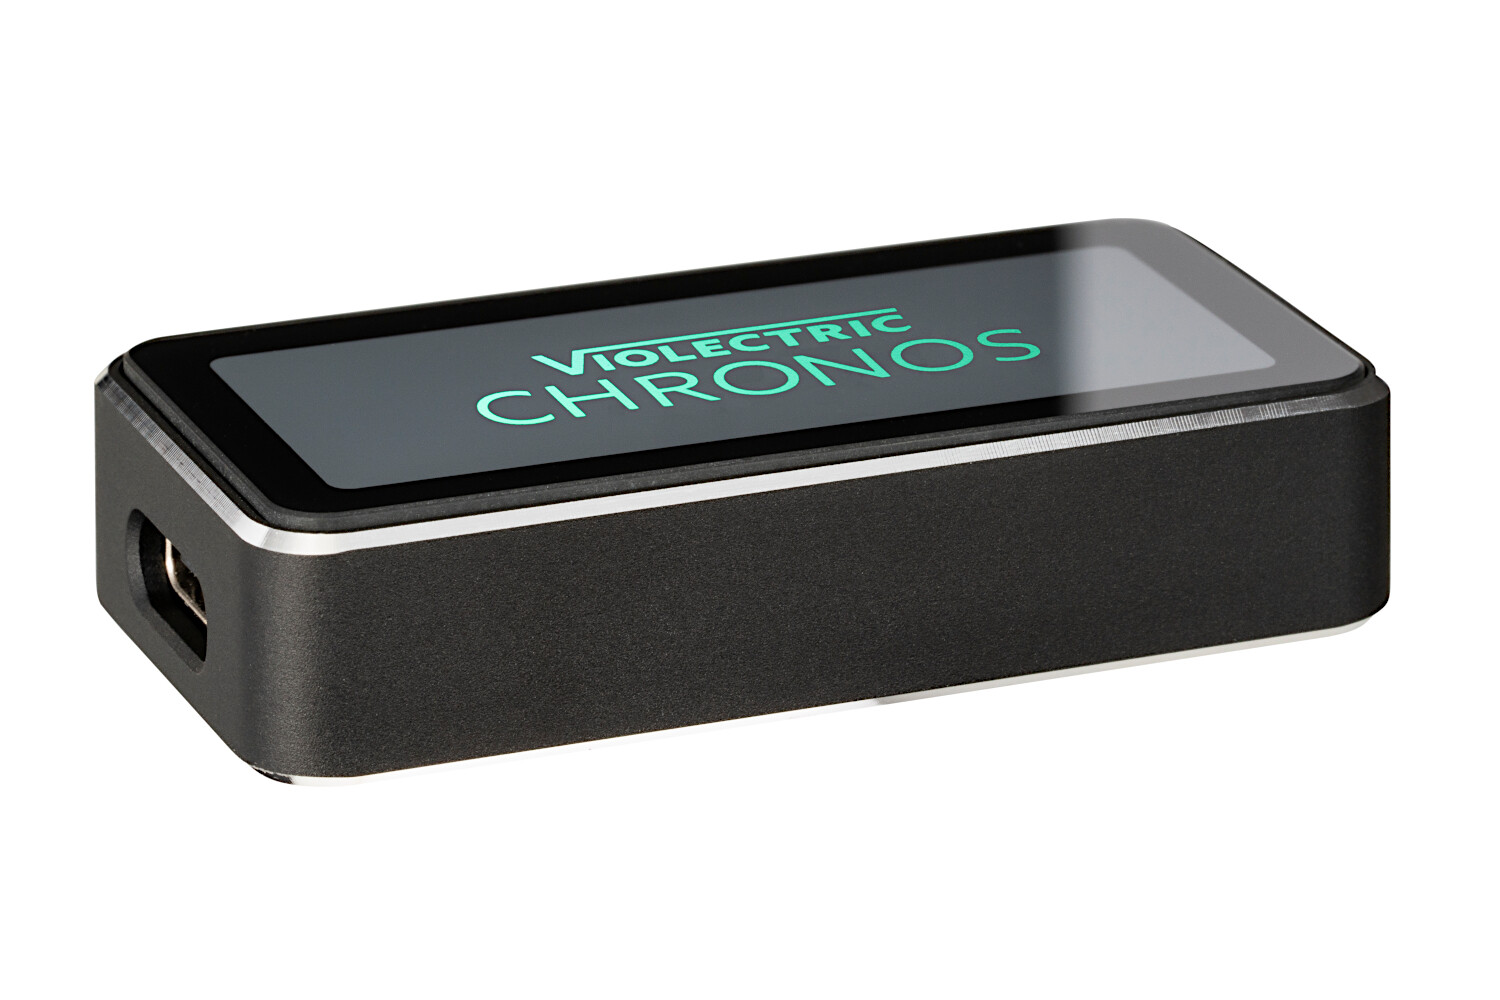 Violectric Chronos portable DAC  / headphone amp